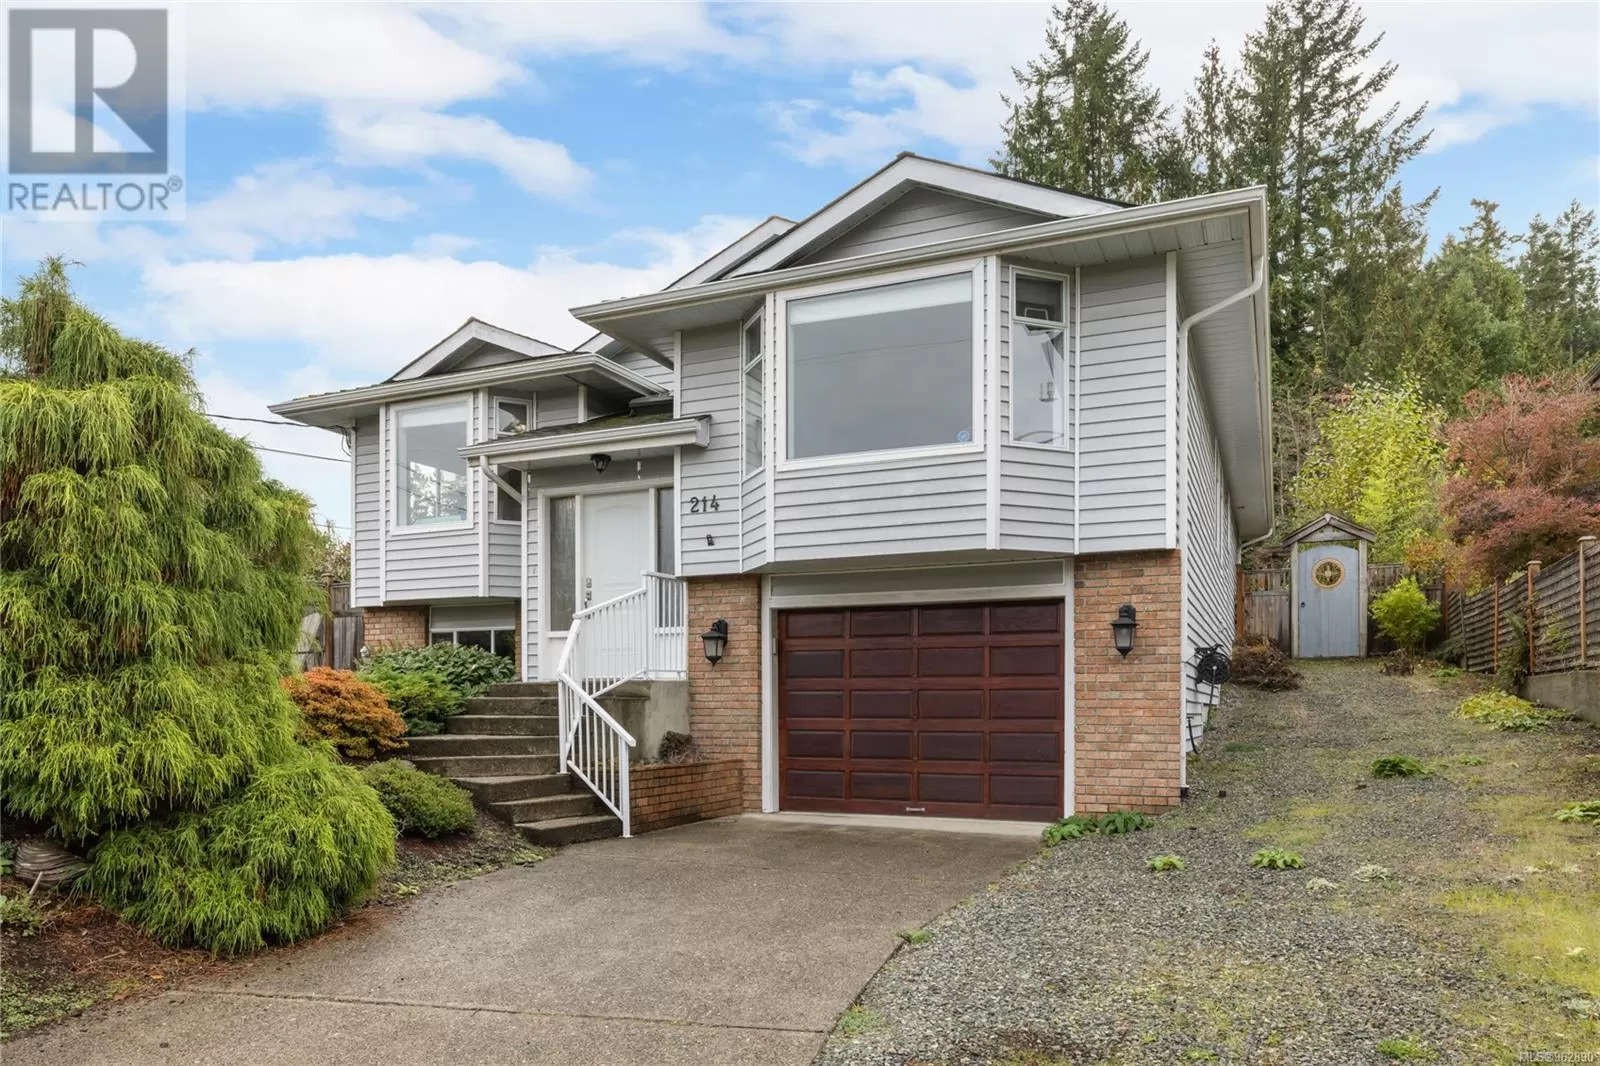 House for rent: 214 Hoylake Rd W, Qualicum Beach, British Columbia V9K 1K5